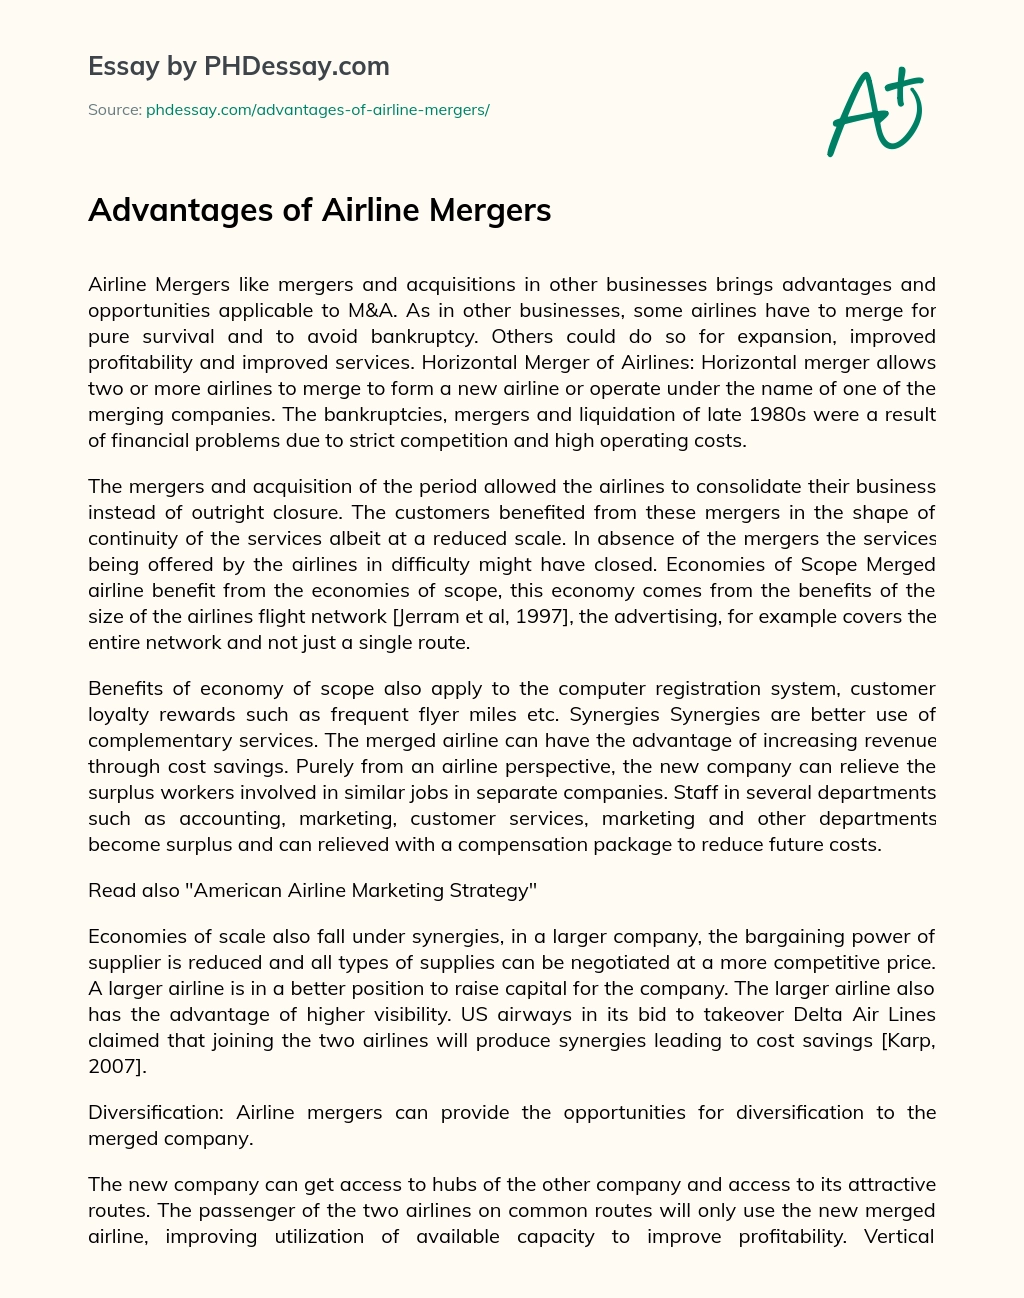 Advantages of Airline Mergers essay